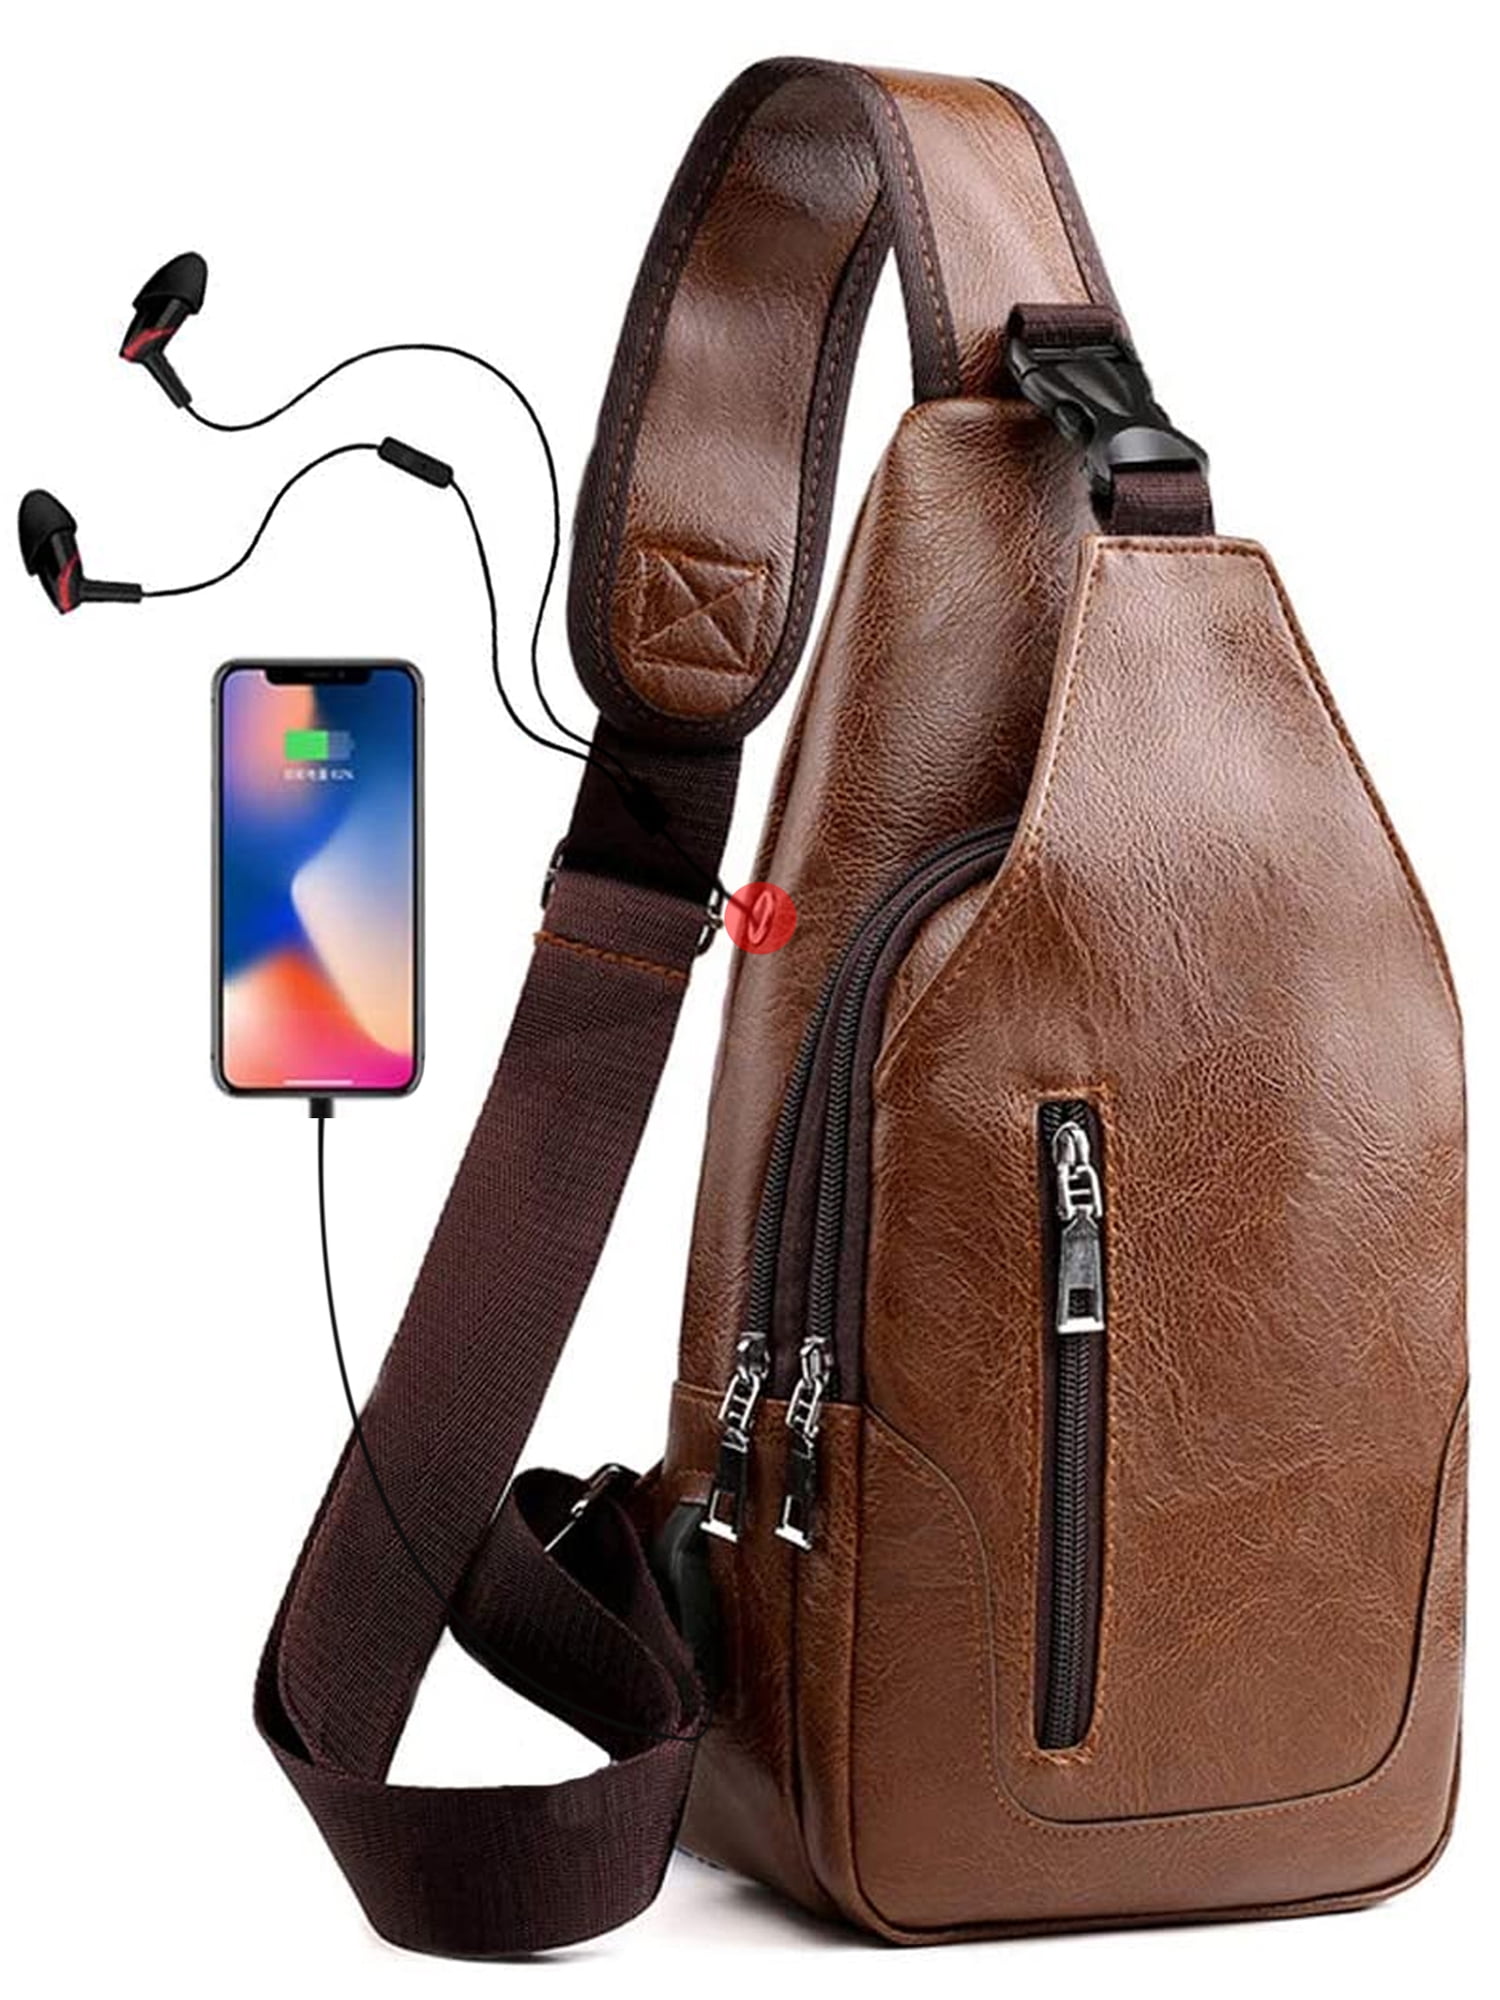 Mens Sling Bag Lightweight Waterproof Shoulder Crossbody Bag with USB Charging Port Brown 